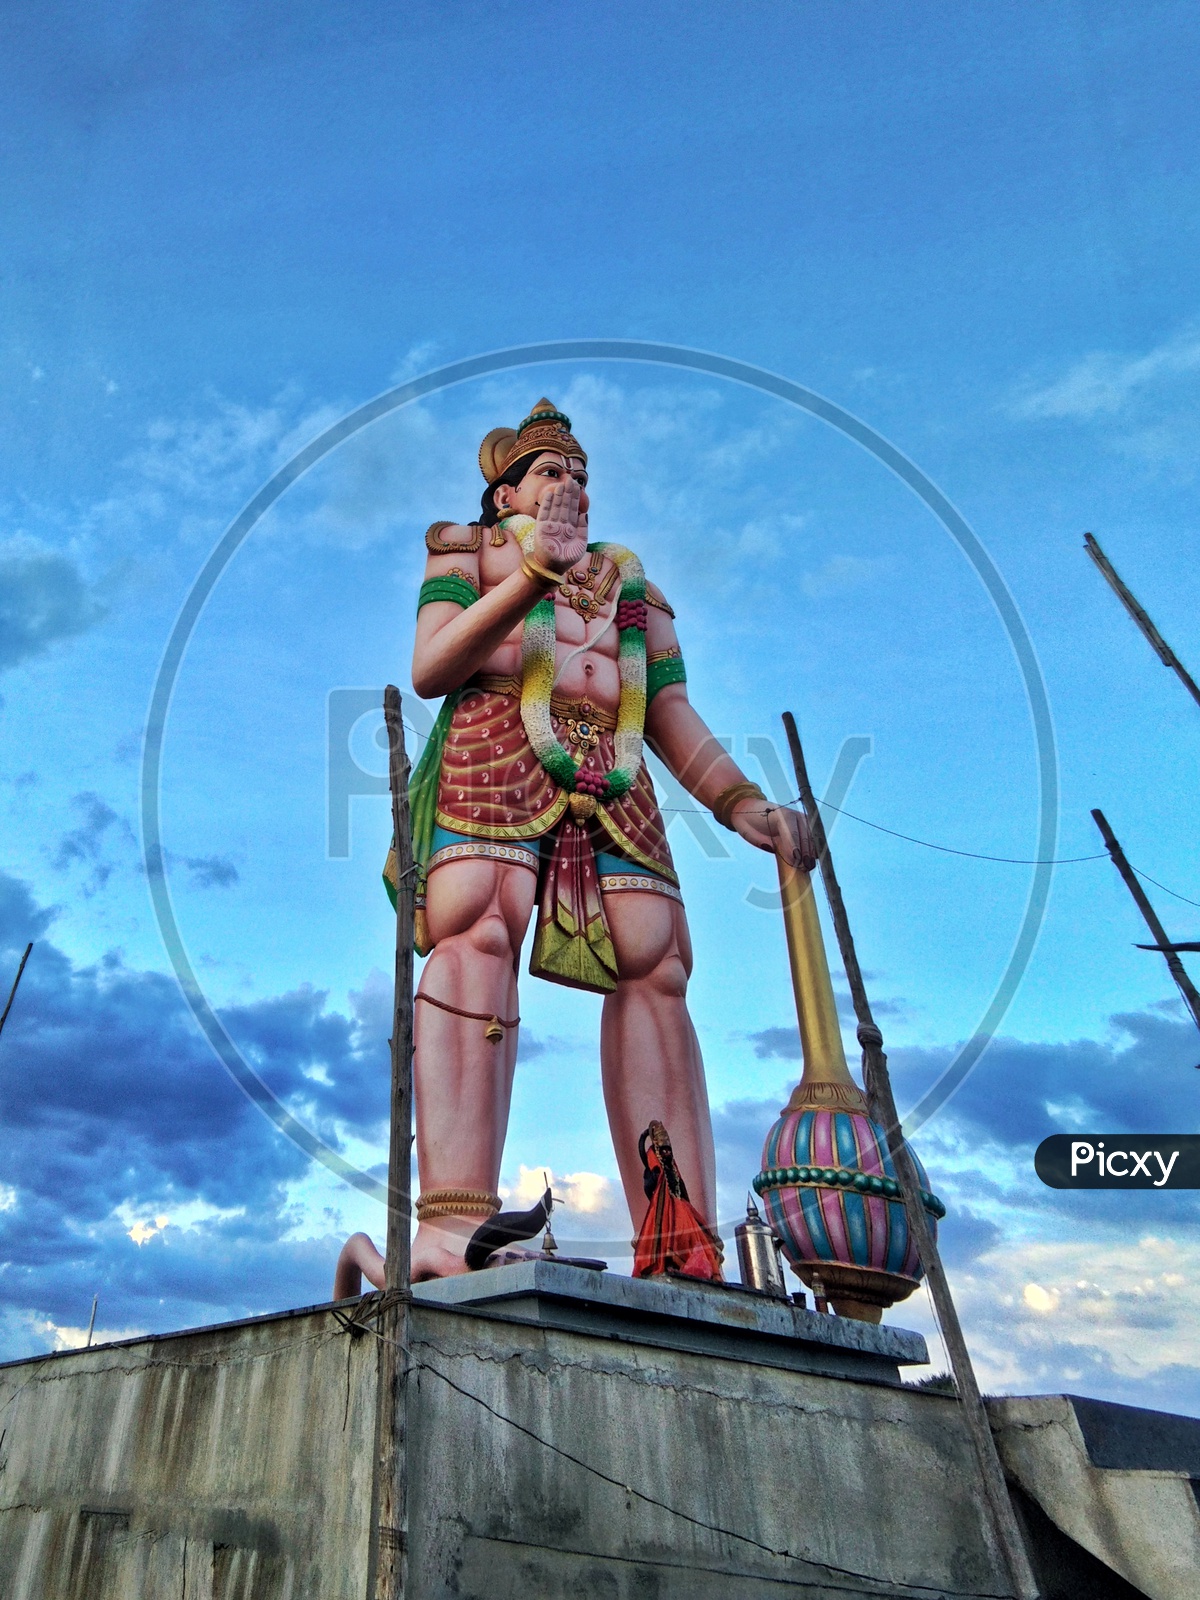 Hanuman Idol